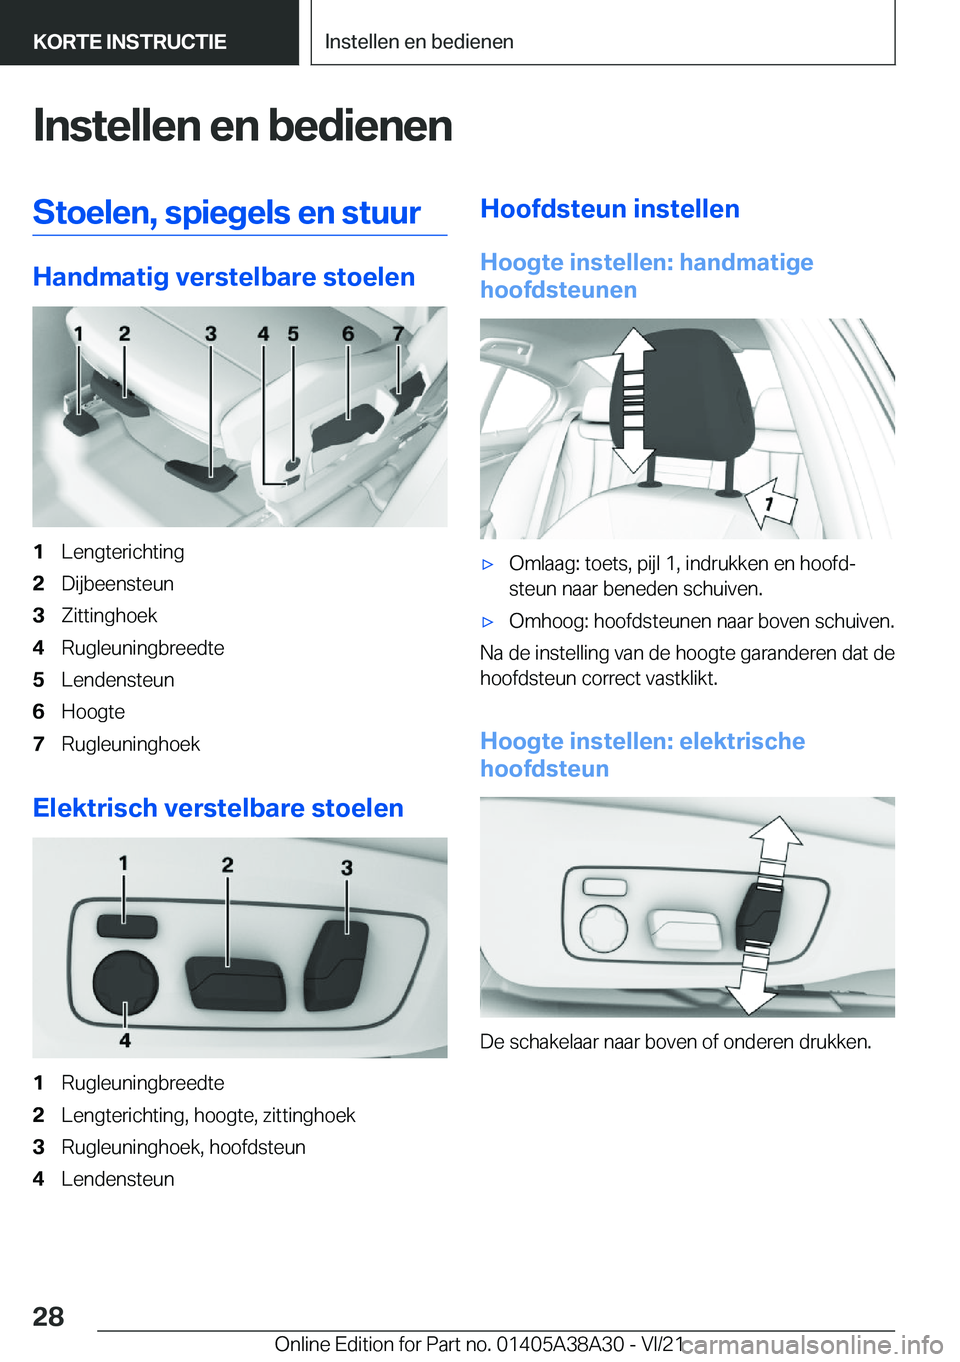 BMW 4 SERIES GRAN COUPE 2022  Instructieboekjes (in Dutch) �I�n�s�t�e�l�l�e�n��e�n��b�e�d�i�e�n�e�n�S�t�o�e�l�e�n�,��s�p�i�e�g�e�l�s��e�n��s�t�u�u�r
�H�a�n�d�m�a�t�i�g��v�e�r�s�t�e�l�b�a�r�e��s�t�o�e�l�e�n
�1�L�e�n�g�t�e�r�i�c�h�t�i�n�g�2�D�i�j�b�e�e�n